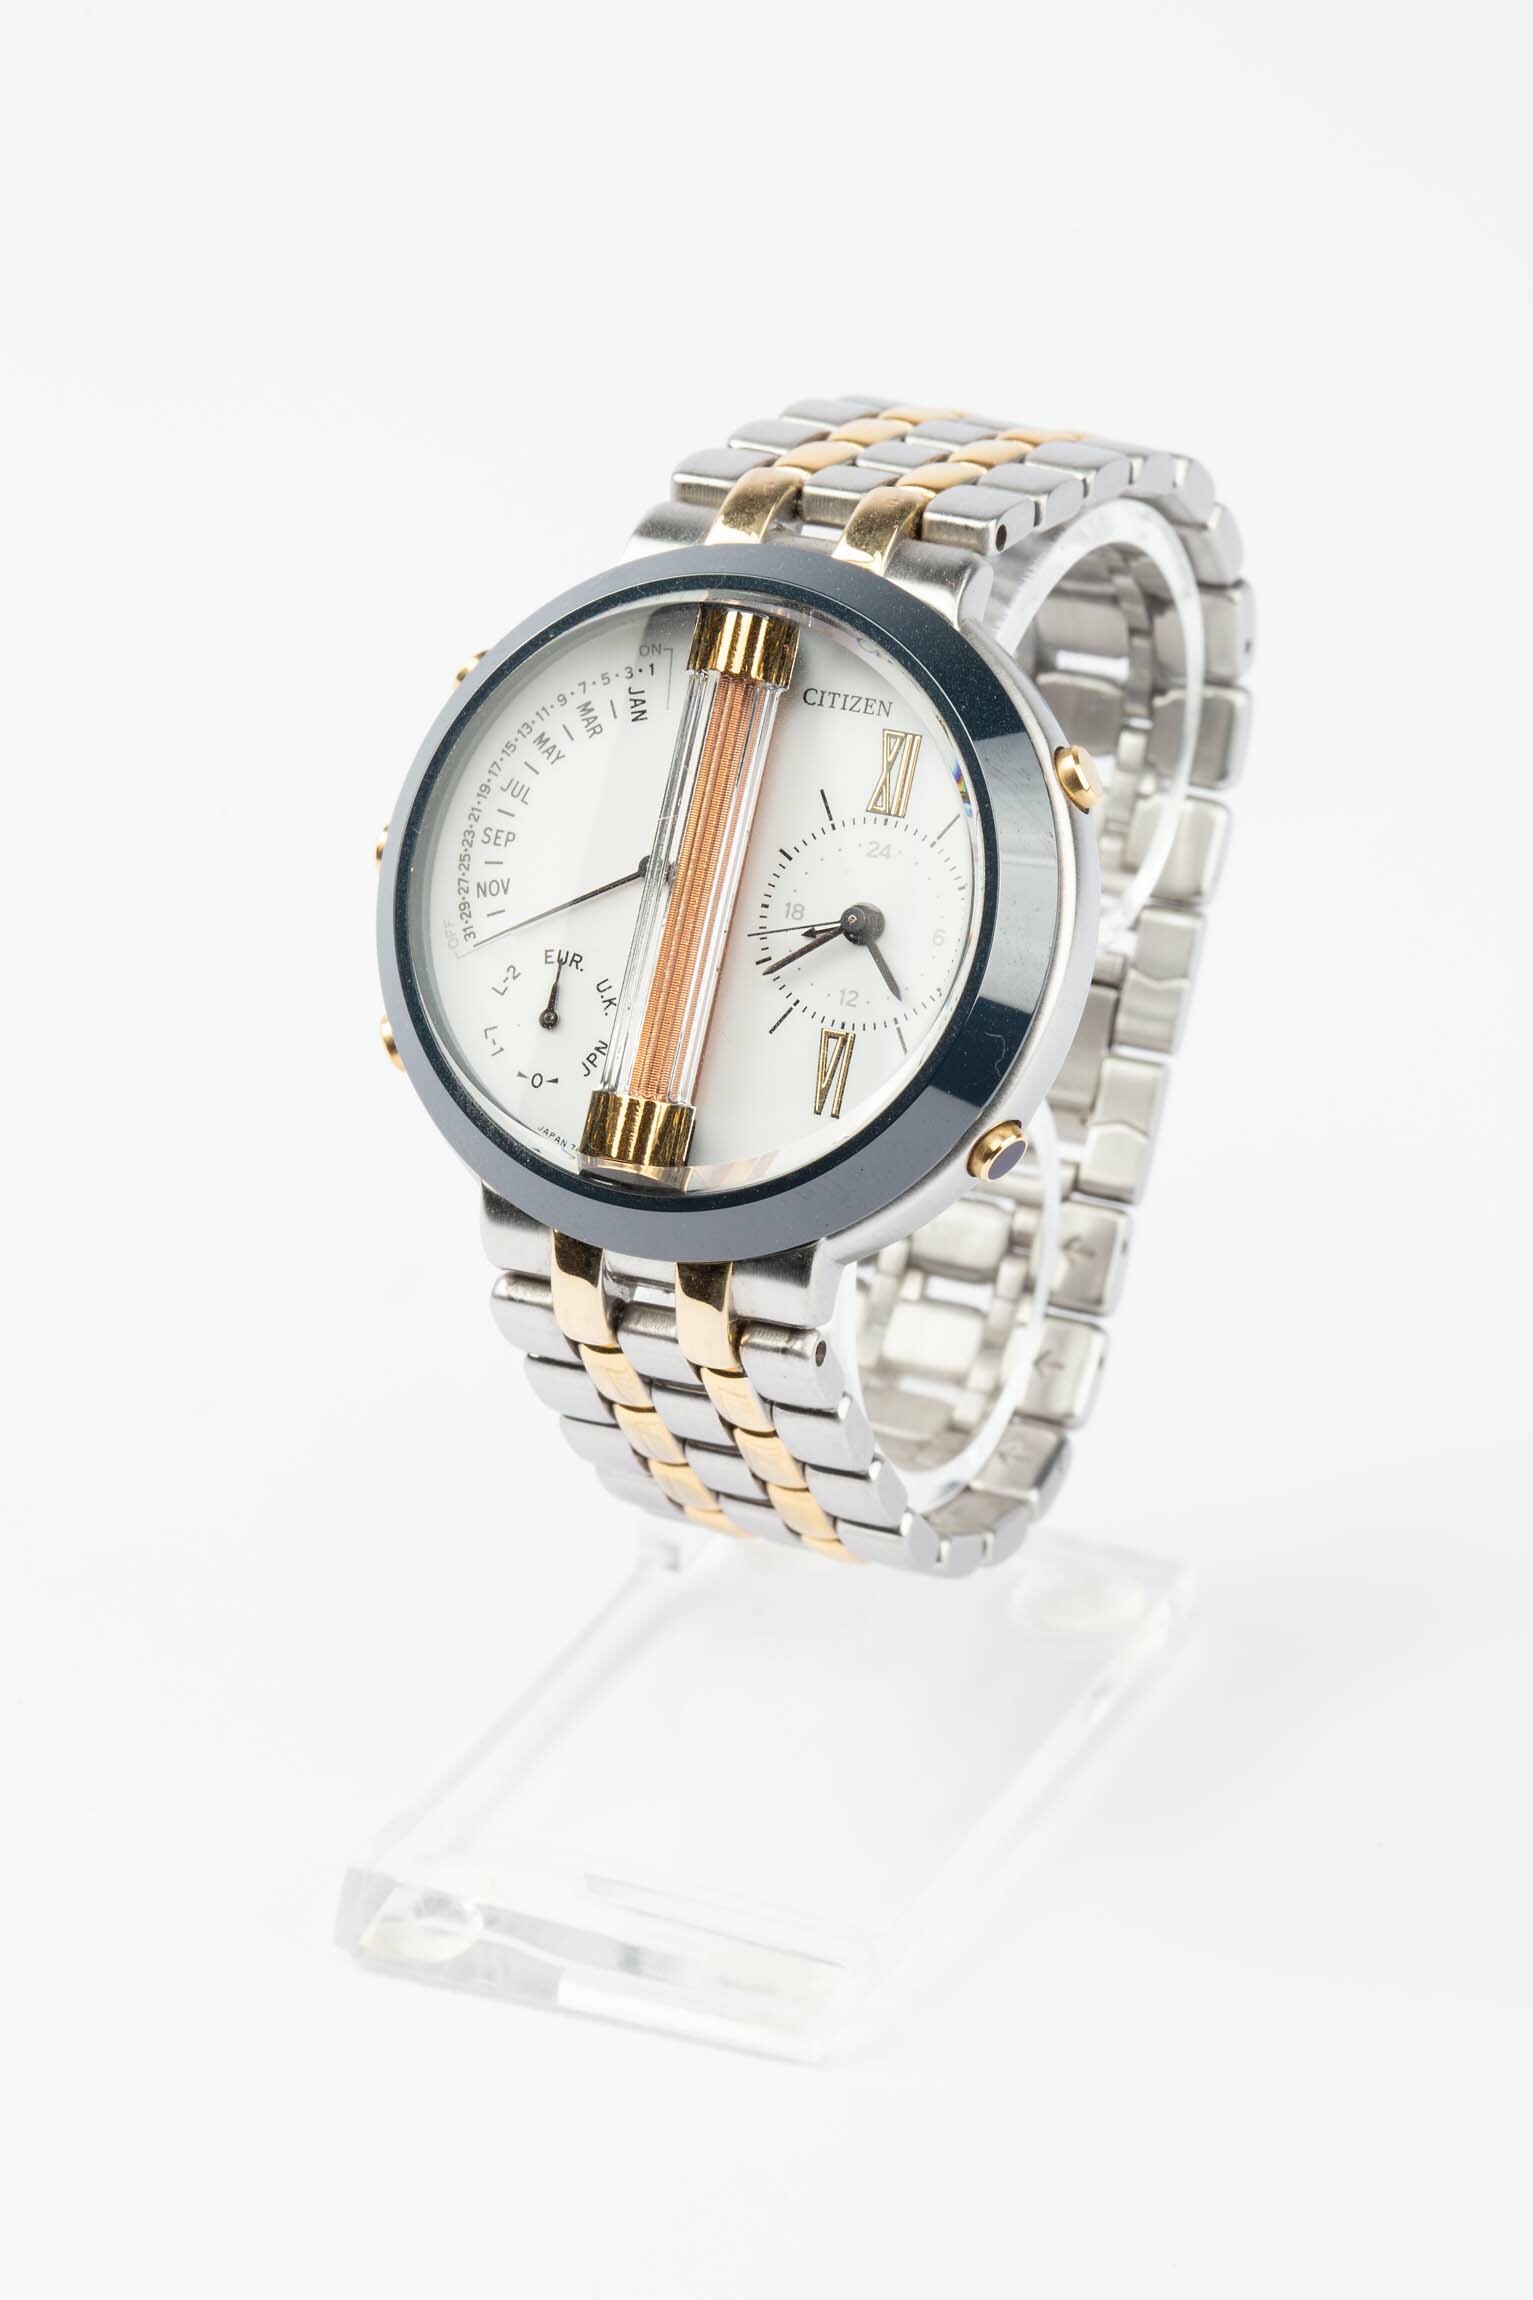 Armbanduhr, Citizen, Japan, 1993-2000 (Deutsches Uhrenmuseum CC BY-SA)